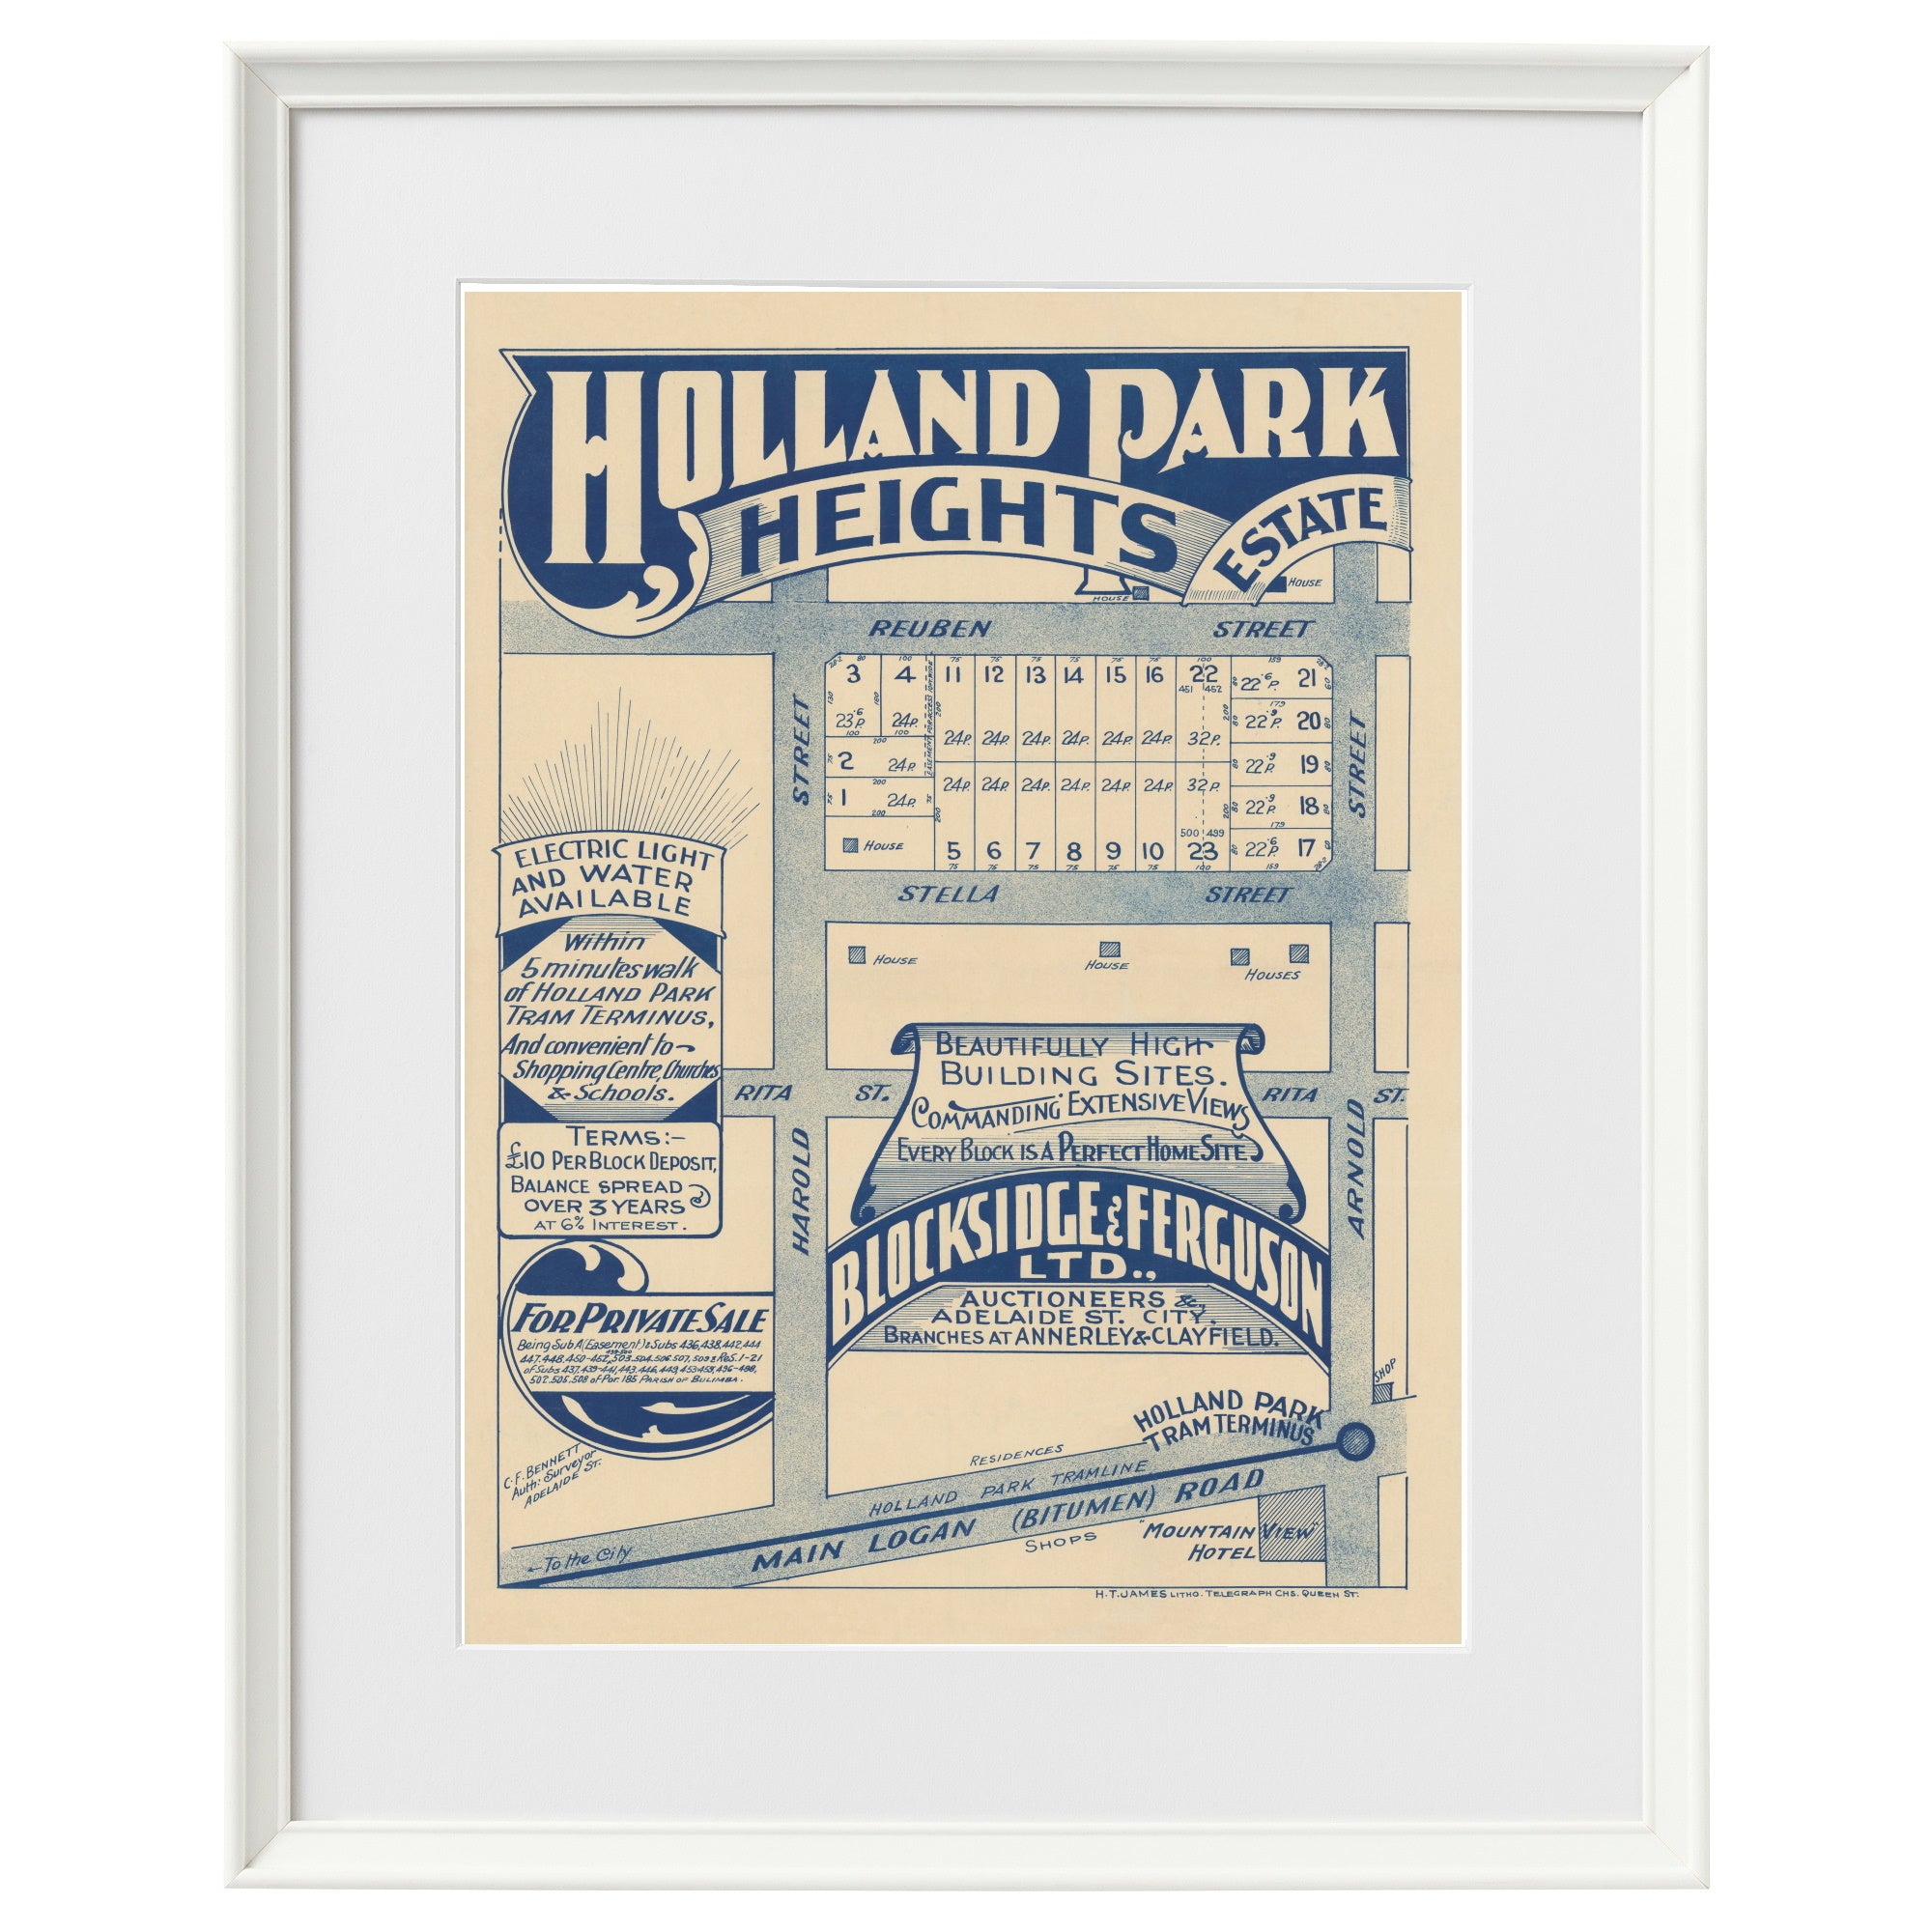 1932 Holland Park - Holland Park Heights